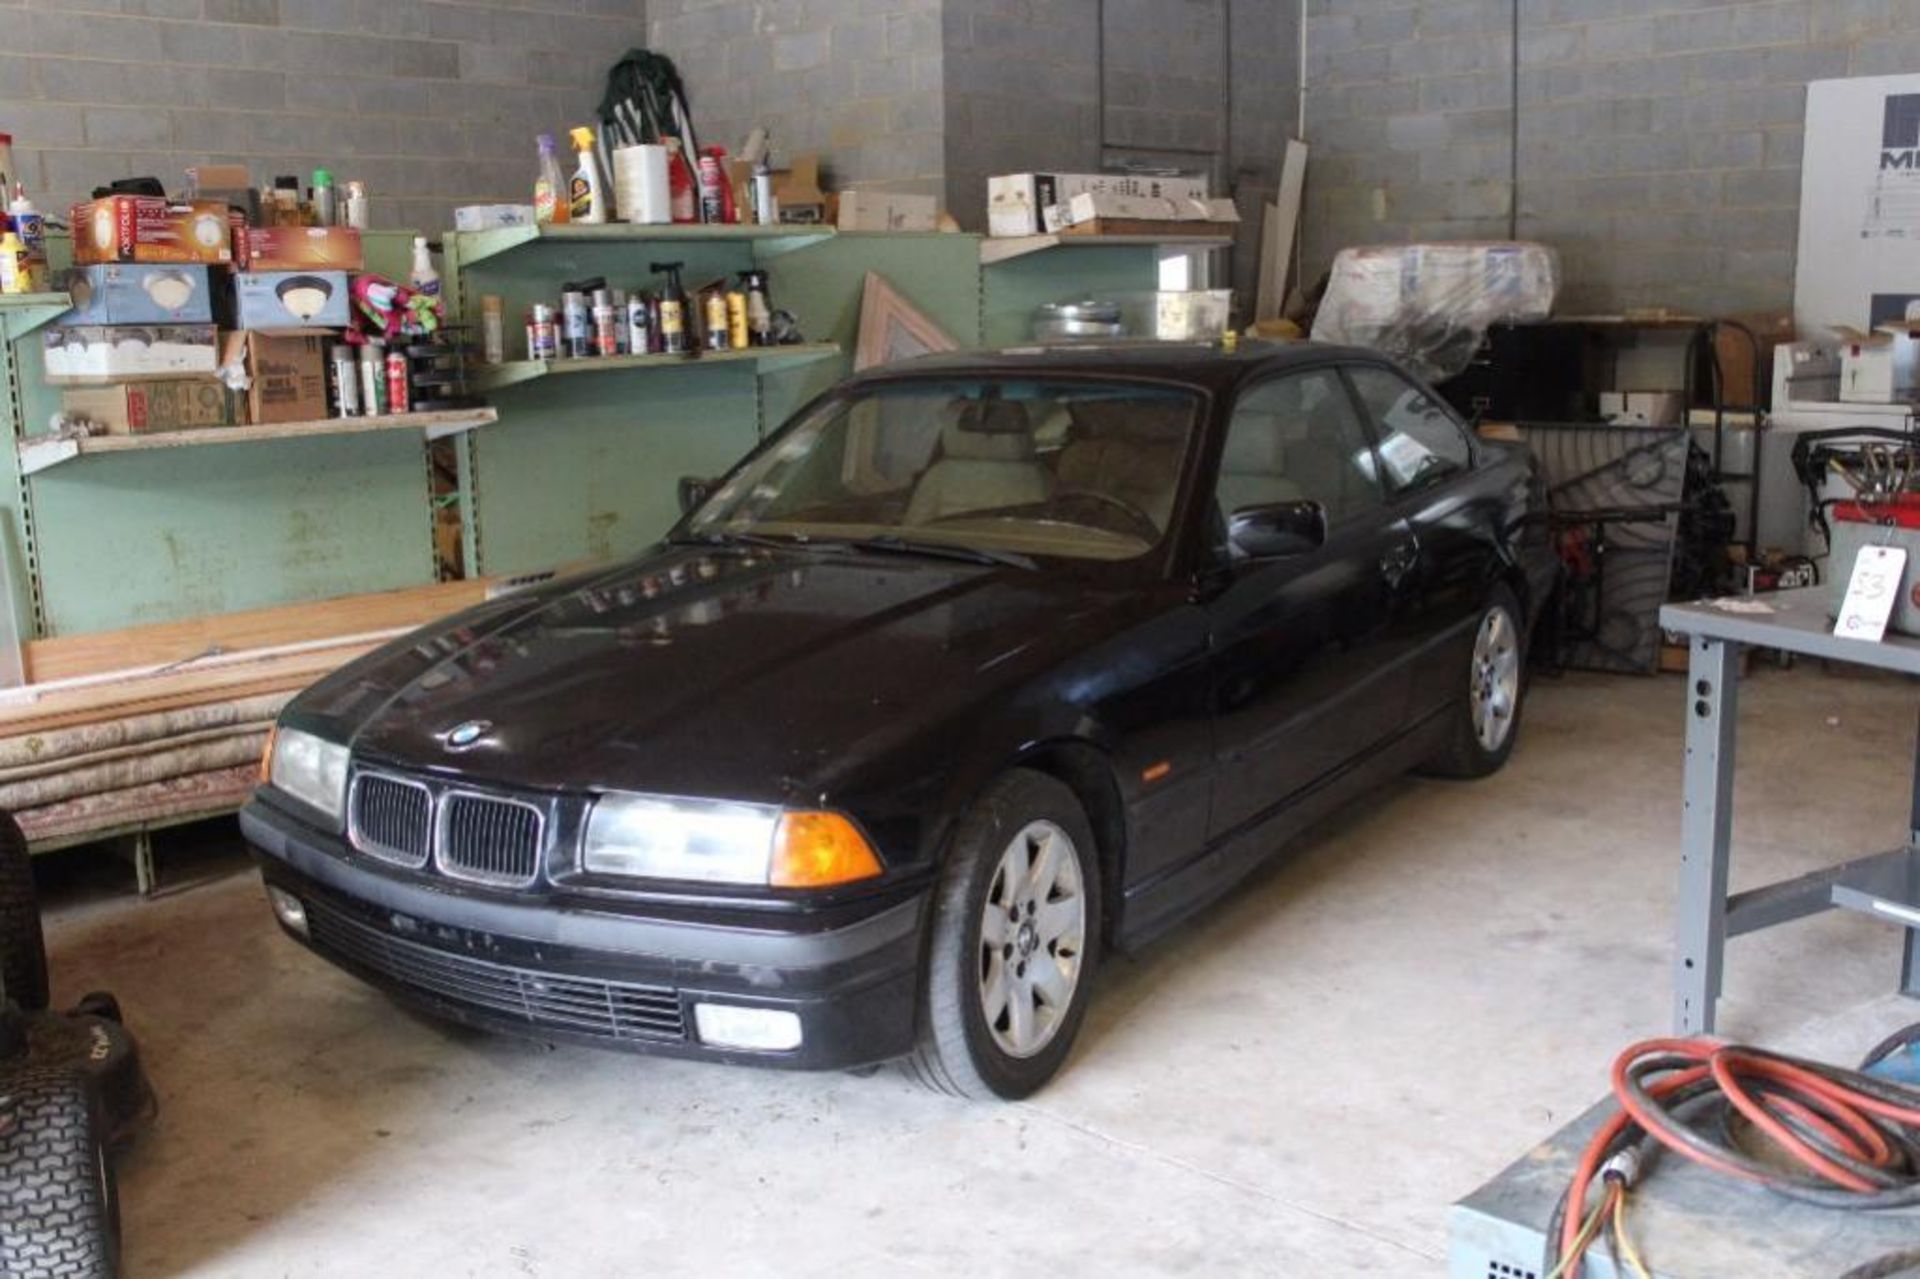 1998 BMW 3 series Passenger Car, VIN # Wbabf7326weh41035